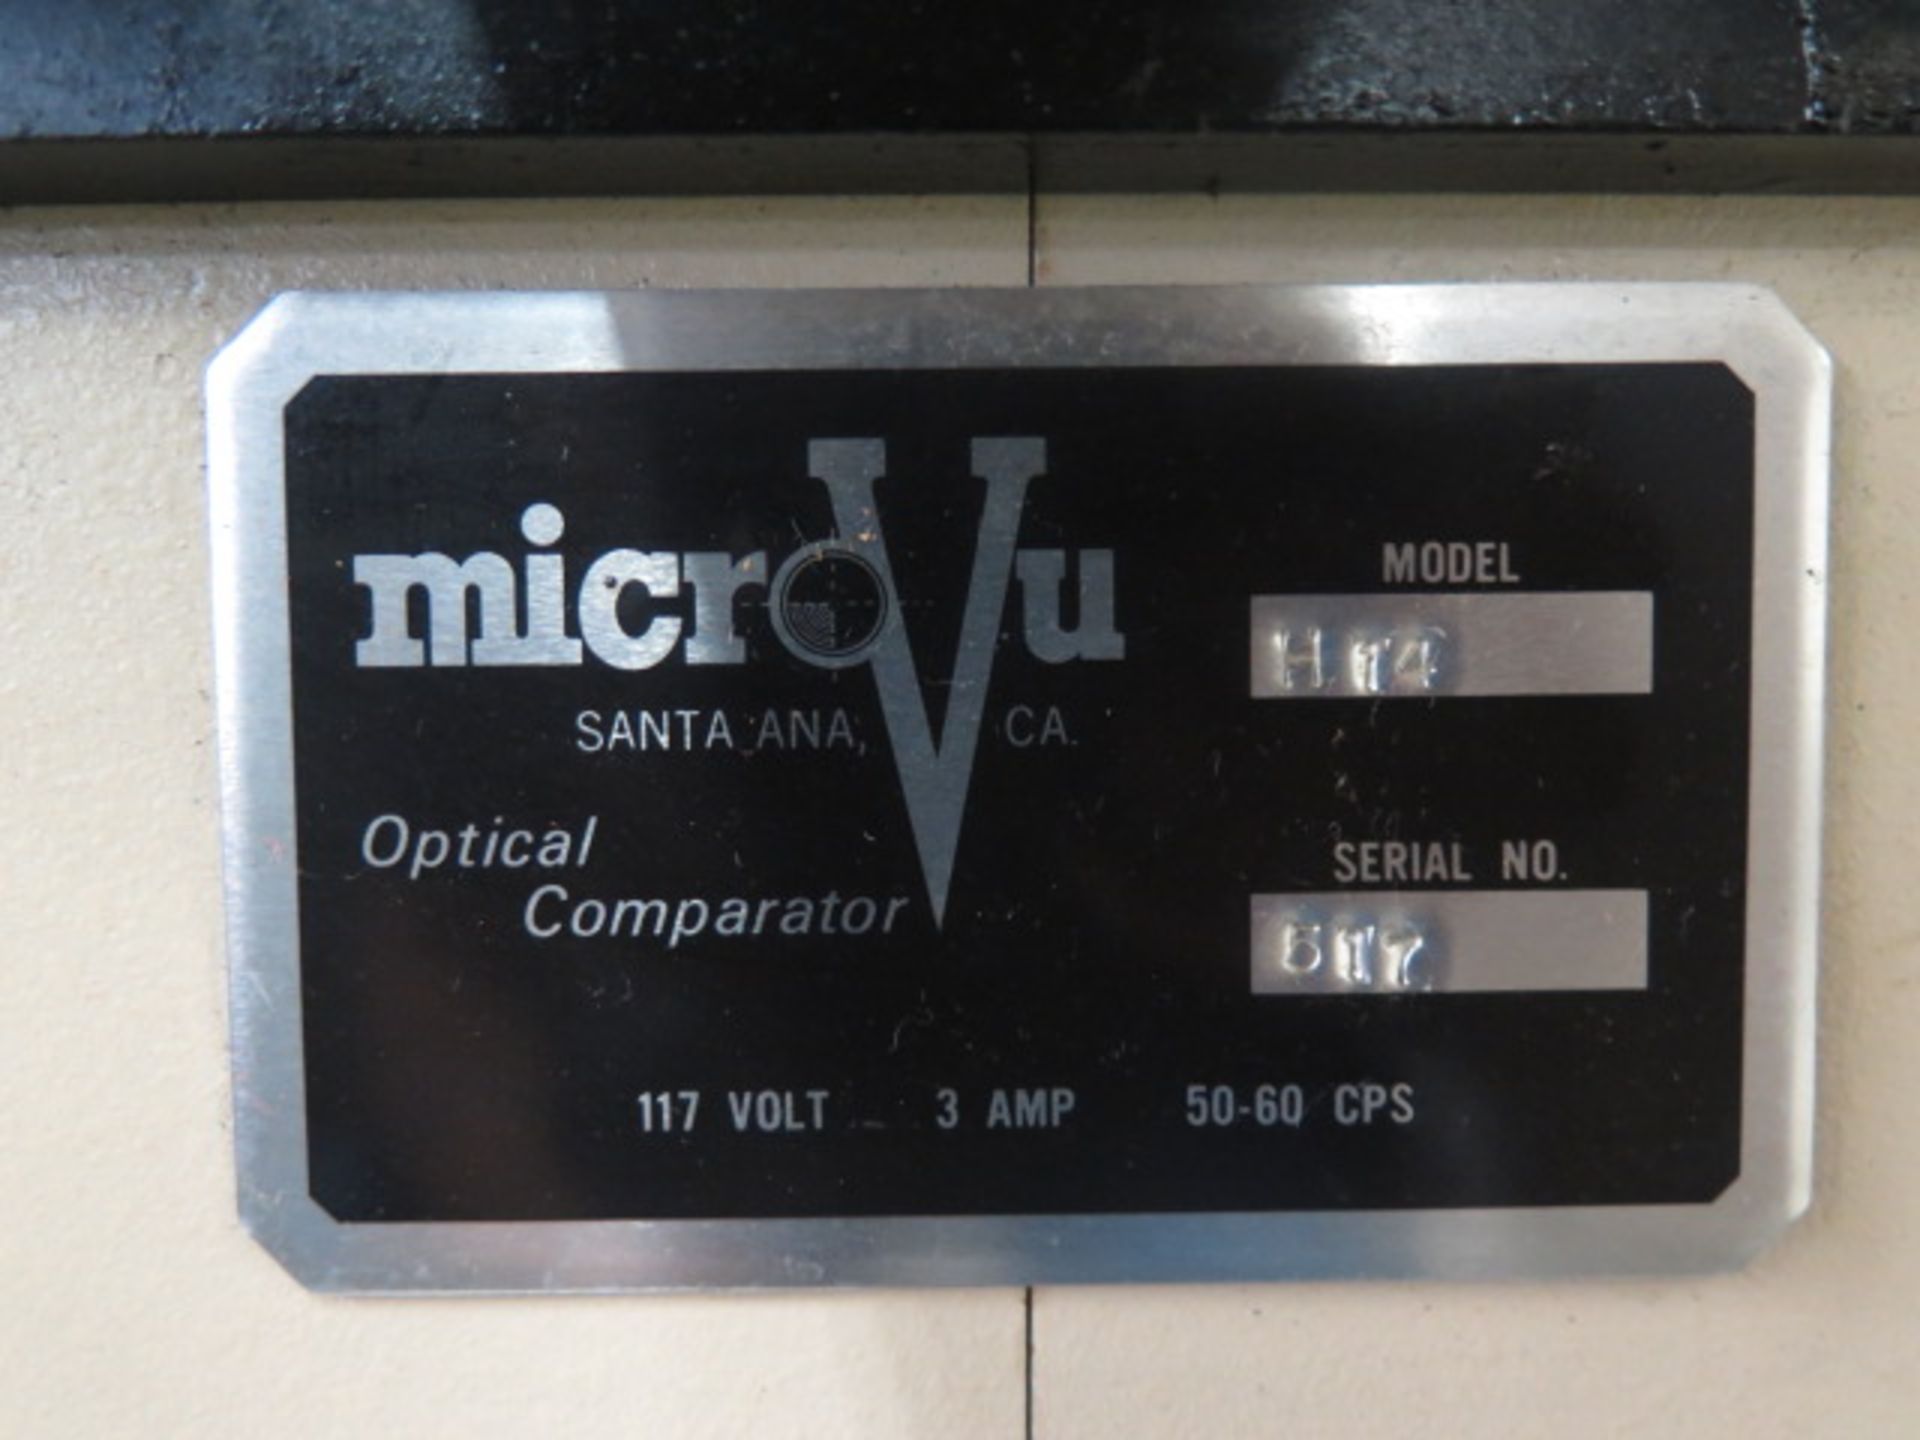 MicroVu mdl. H-14 14” Floor Model Optical Comparator s/n 517 w/ MicroVu Q16 Programmable DRO, - Image 10 of 10